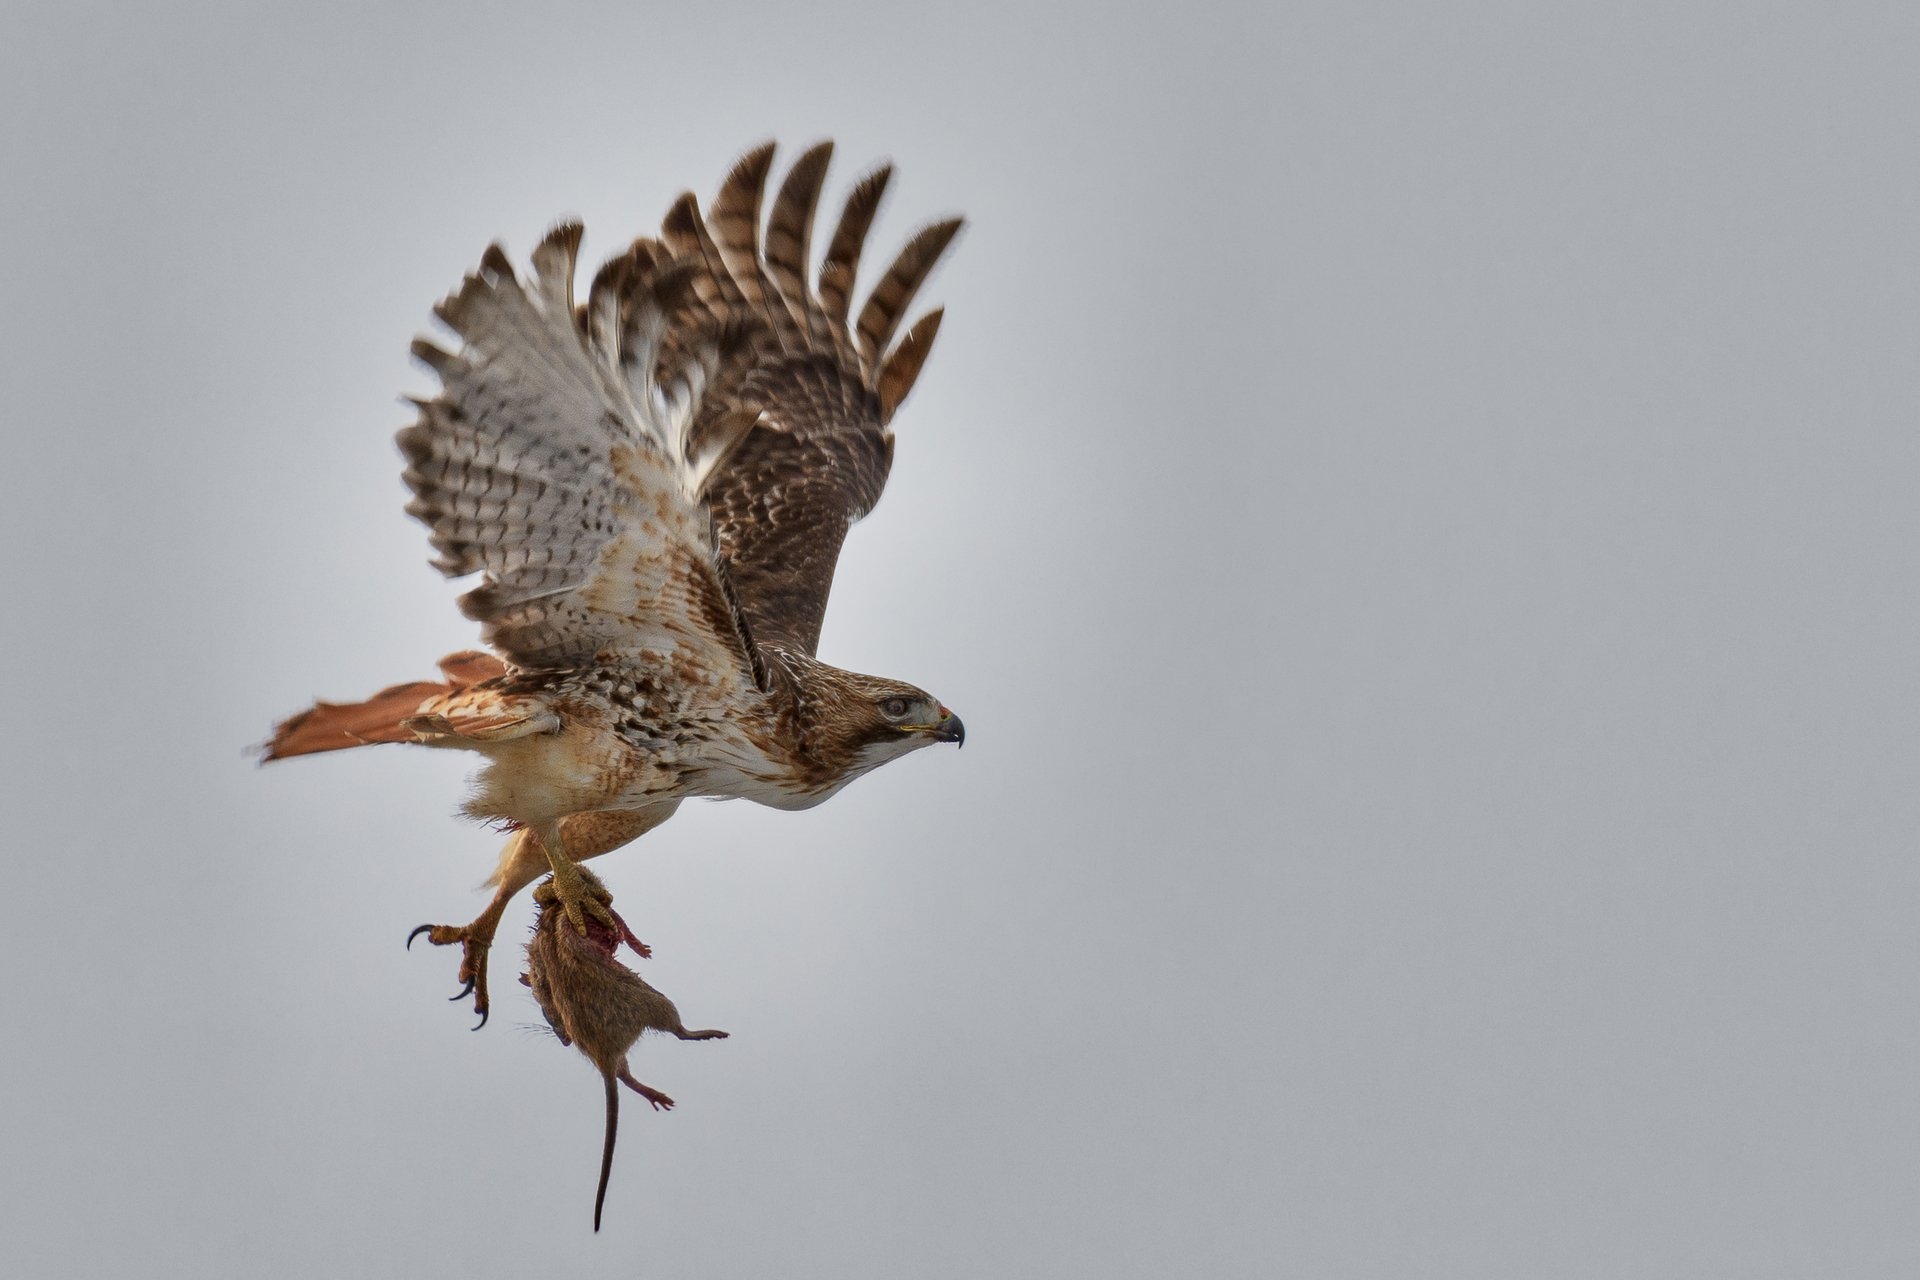 A hawk flies holding a rat in its talons